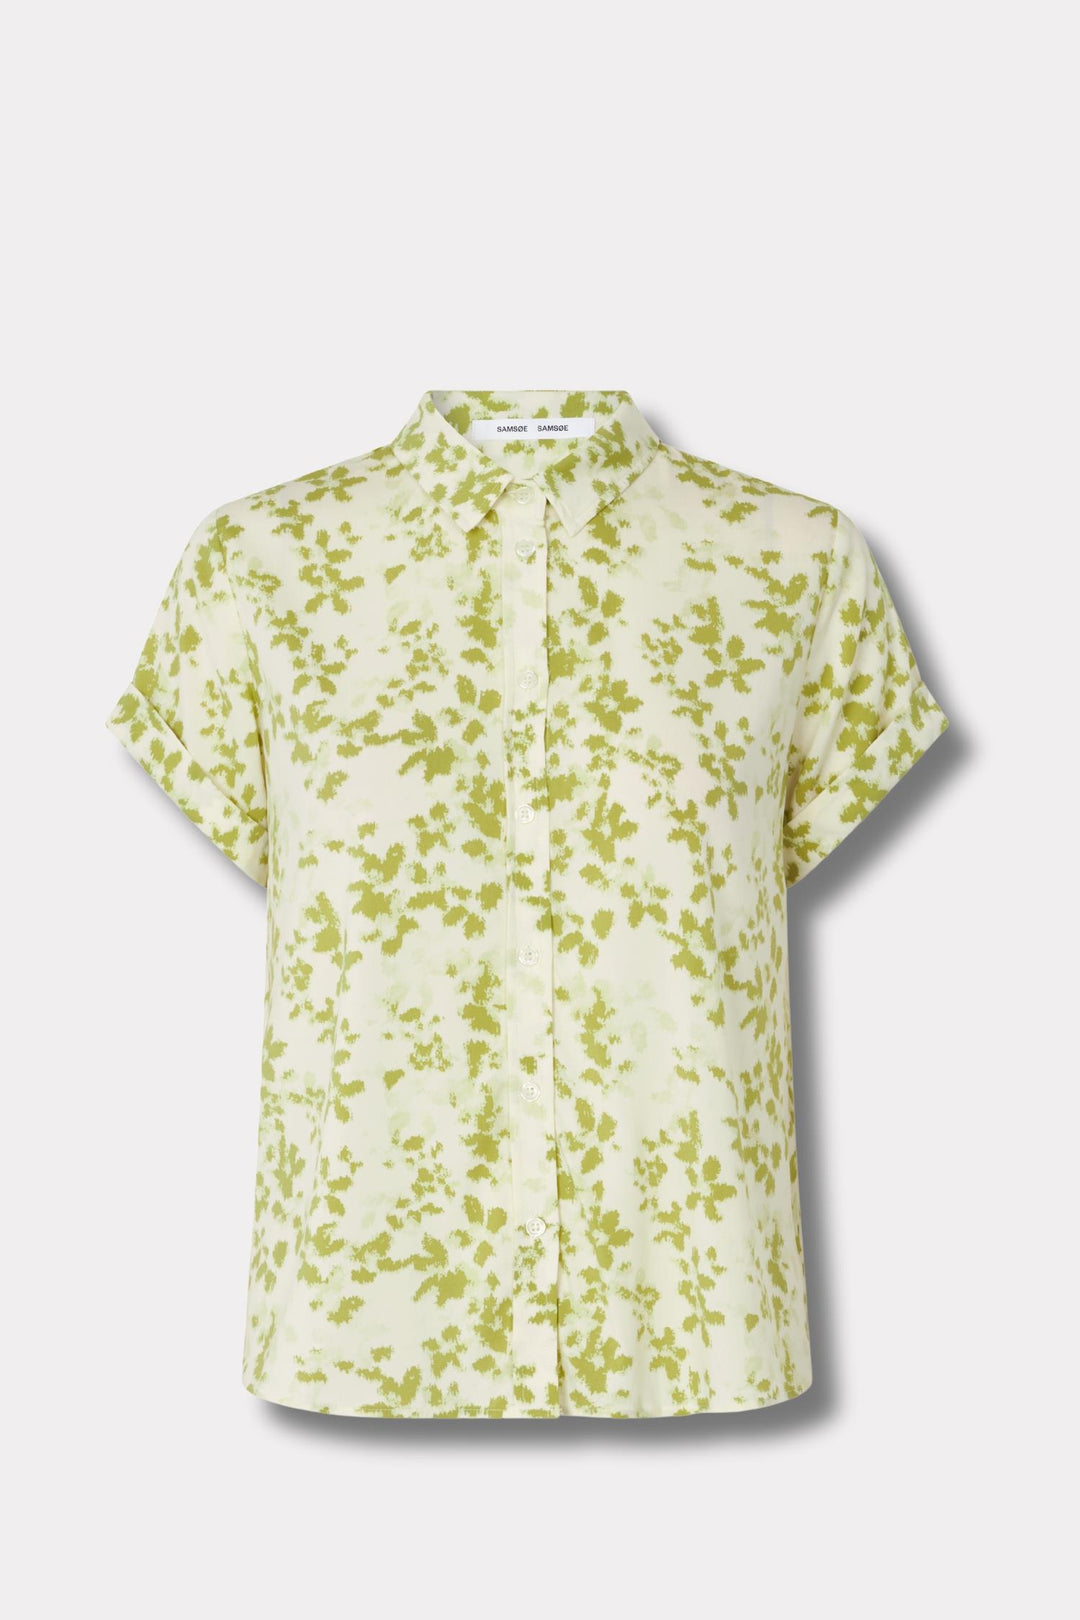 Majan SS Shirt 9942- Meadow Sweet pea